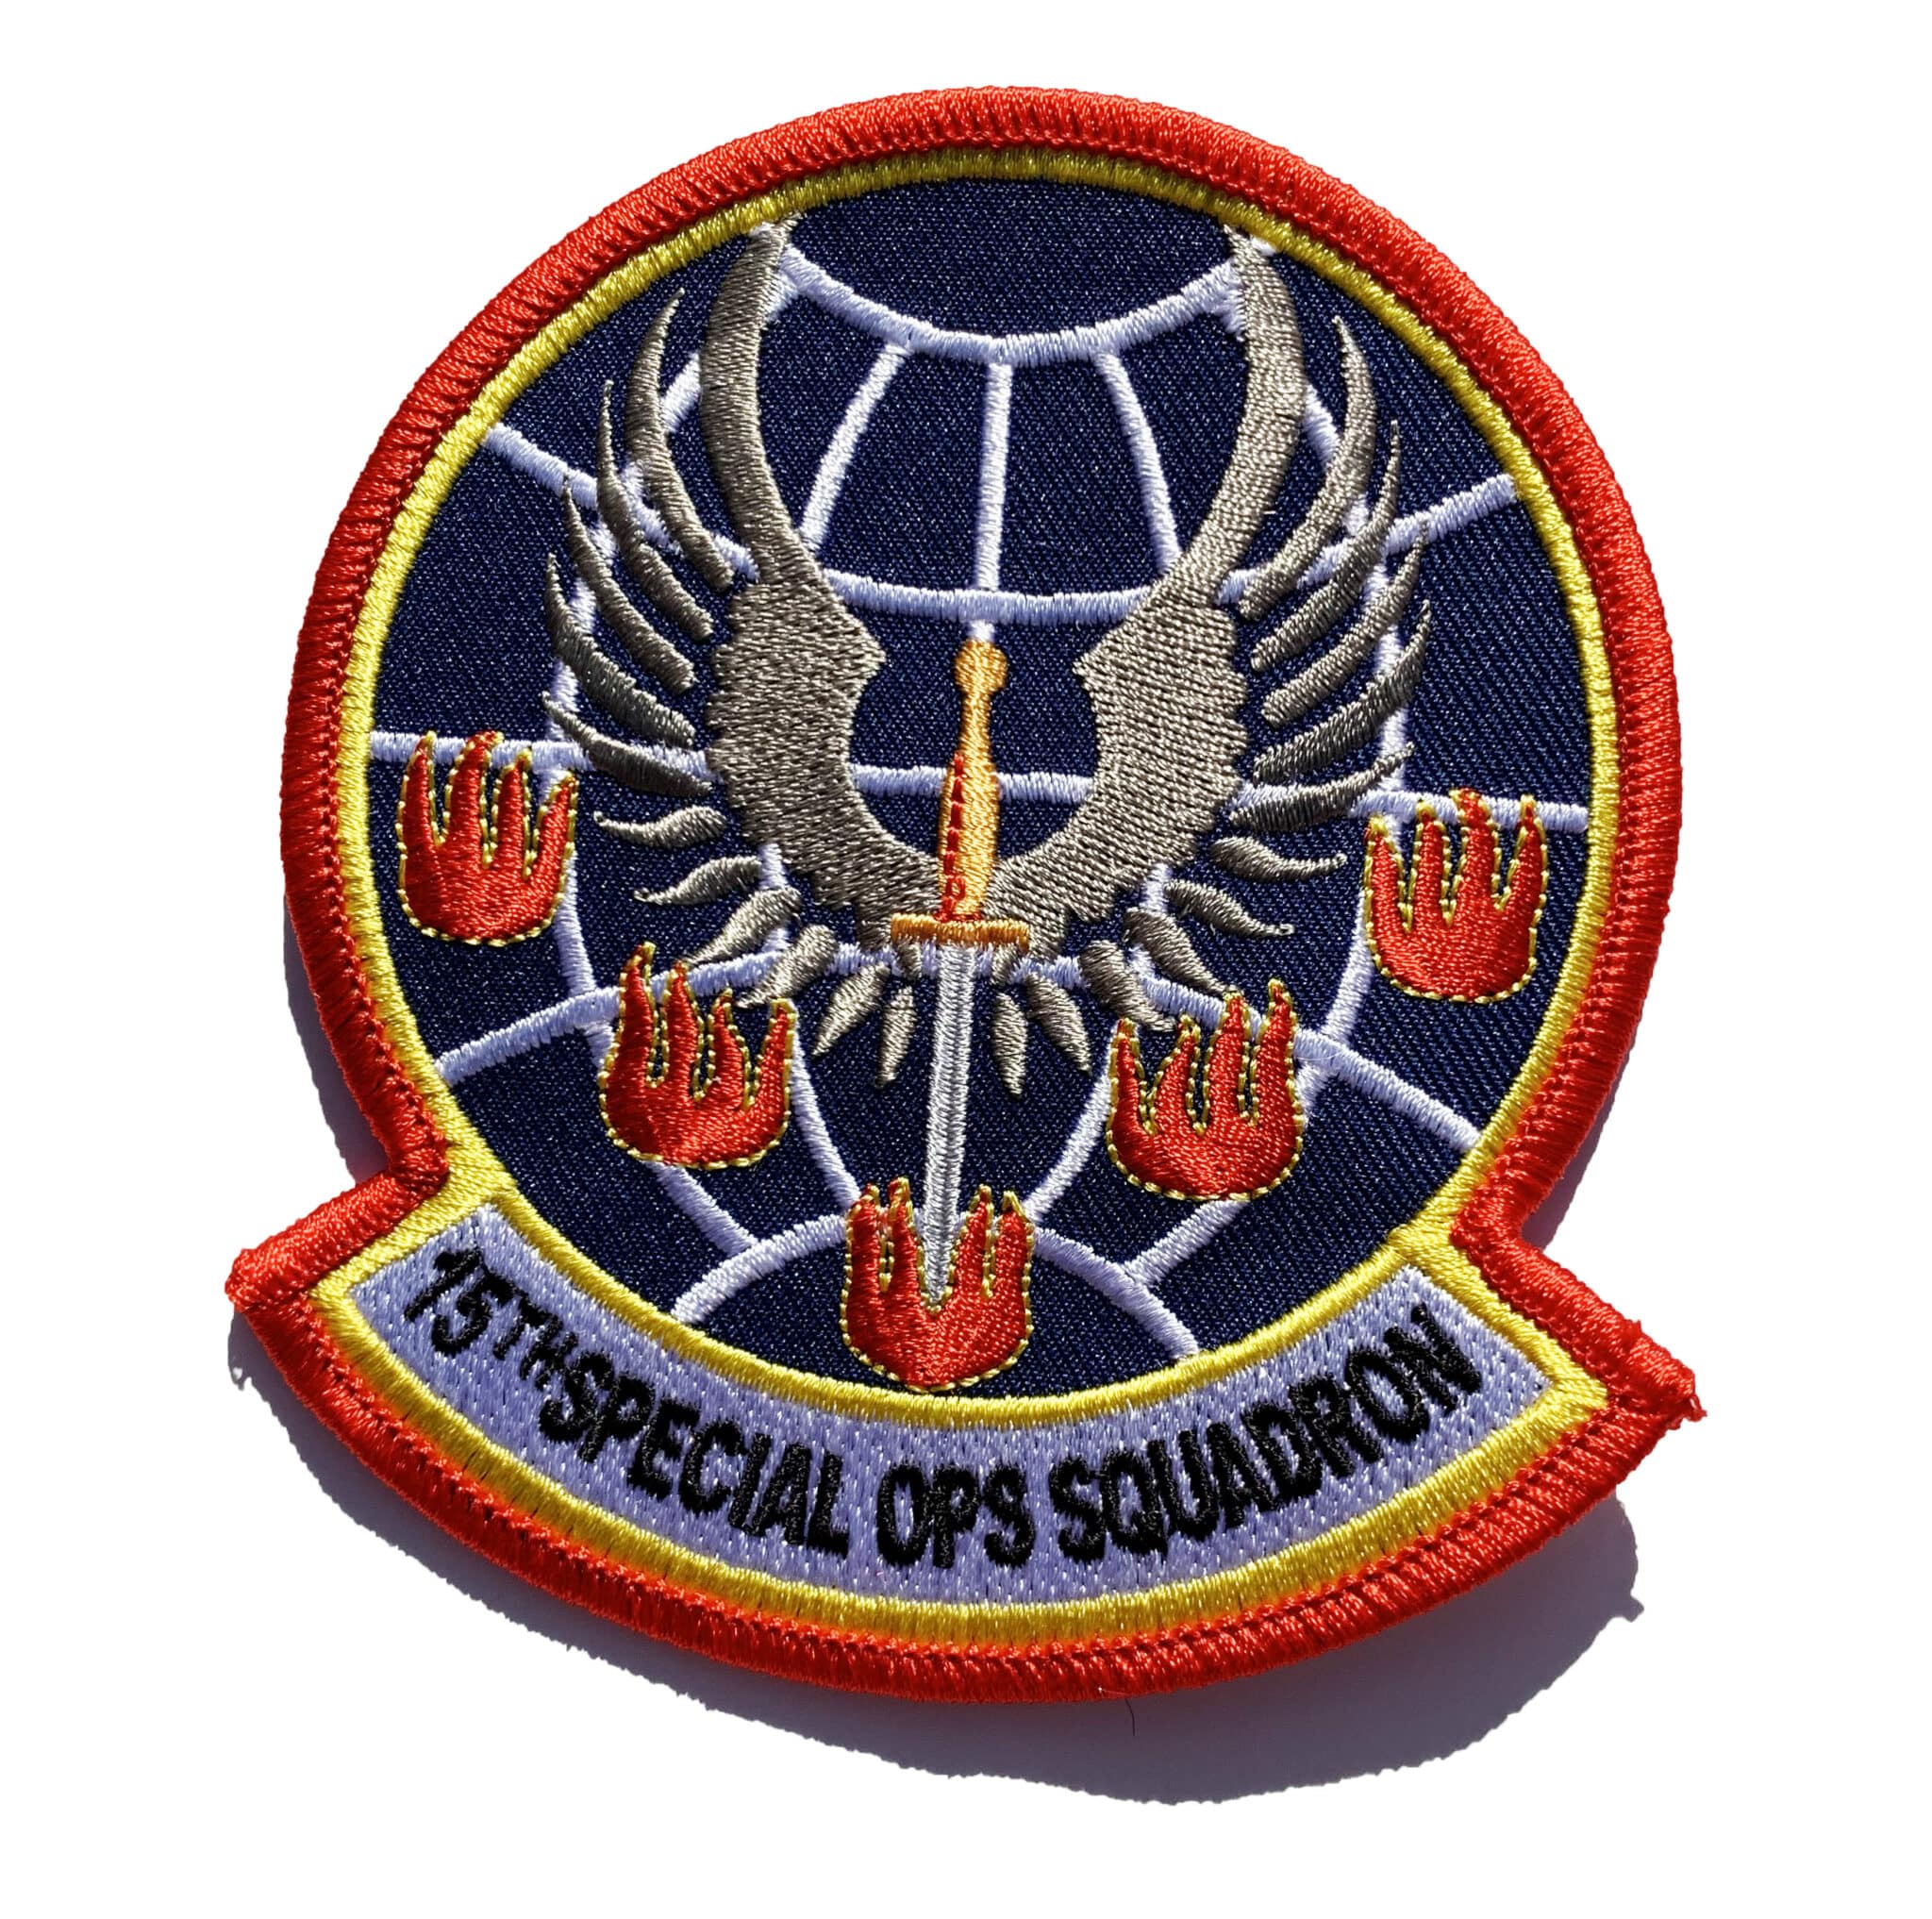 USAF 15th EXPEDITIONARY SPECIAL OPERATIONS SQ ESSENTIAL AF ORIGINAL PATCH 